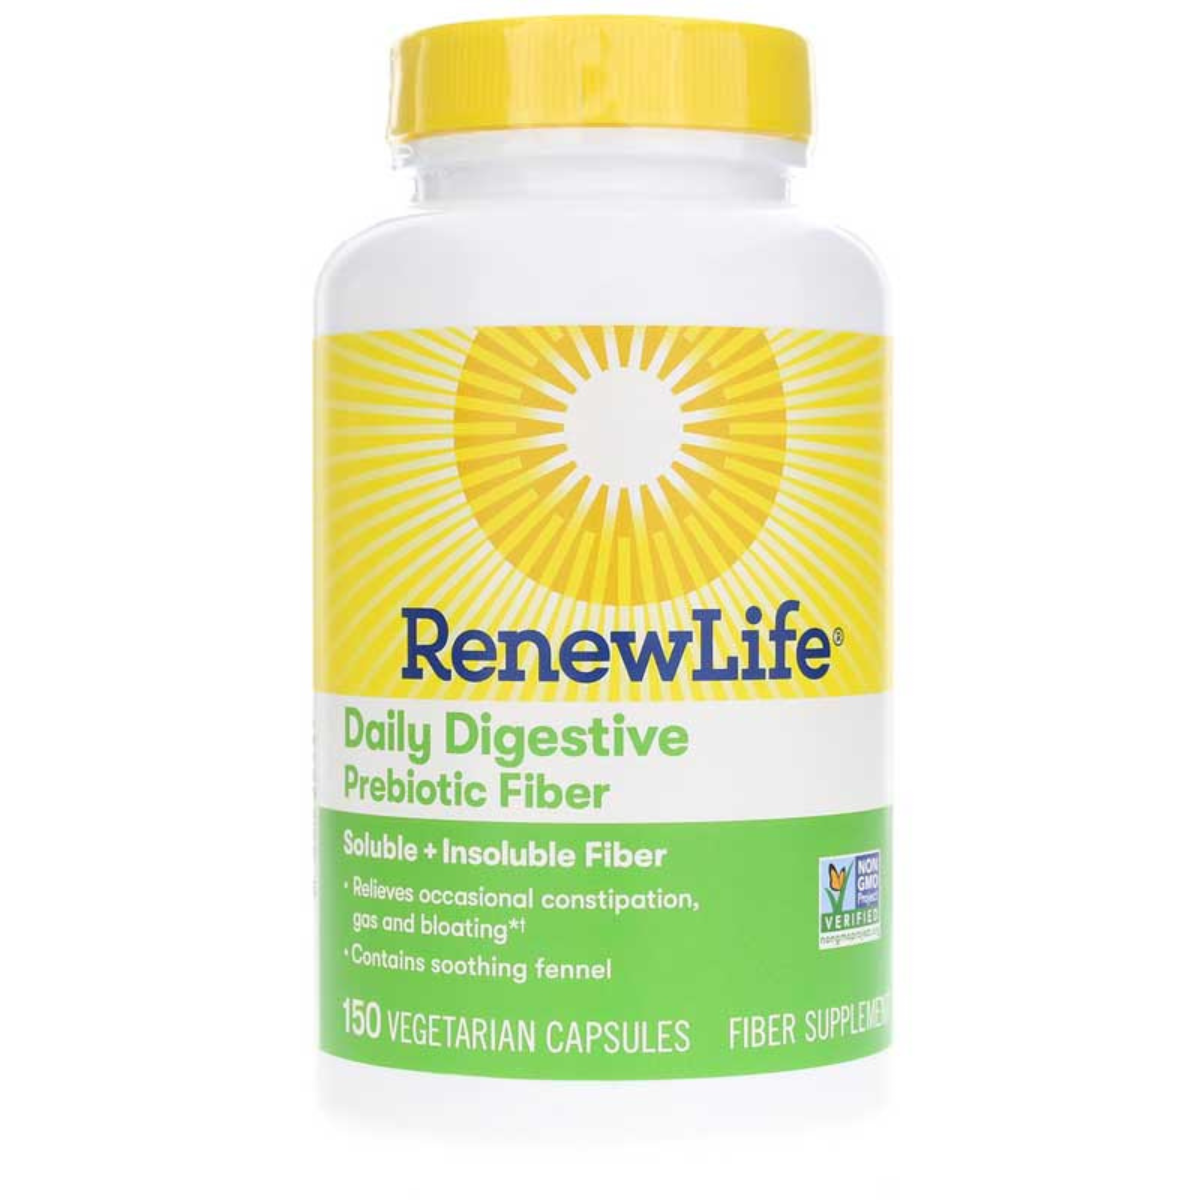 Daily Digestive Prebiotic Fiber on sale!